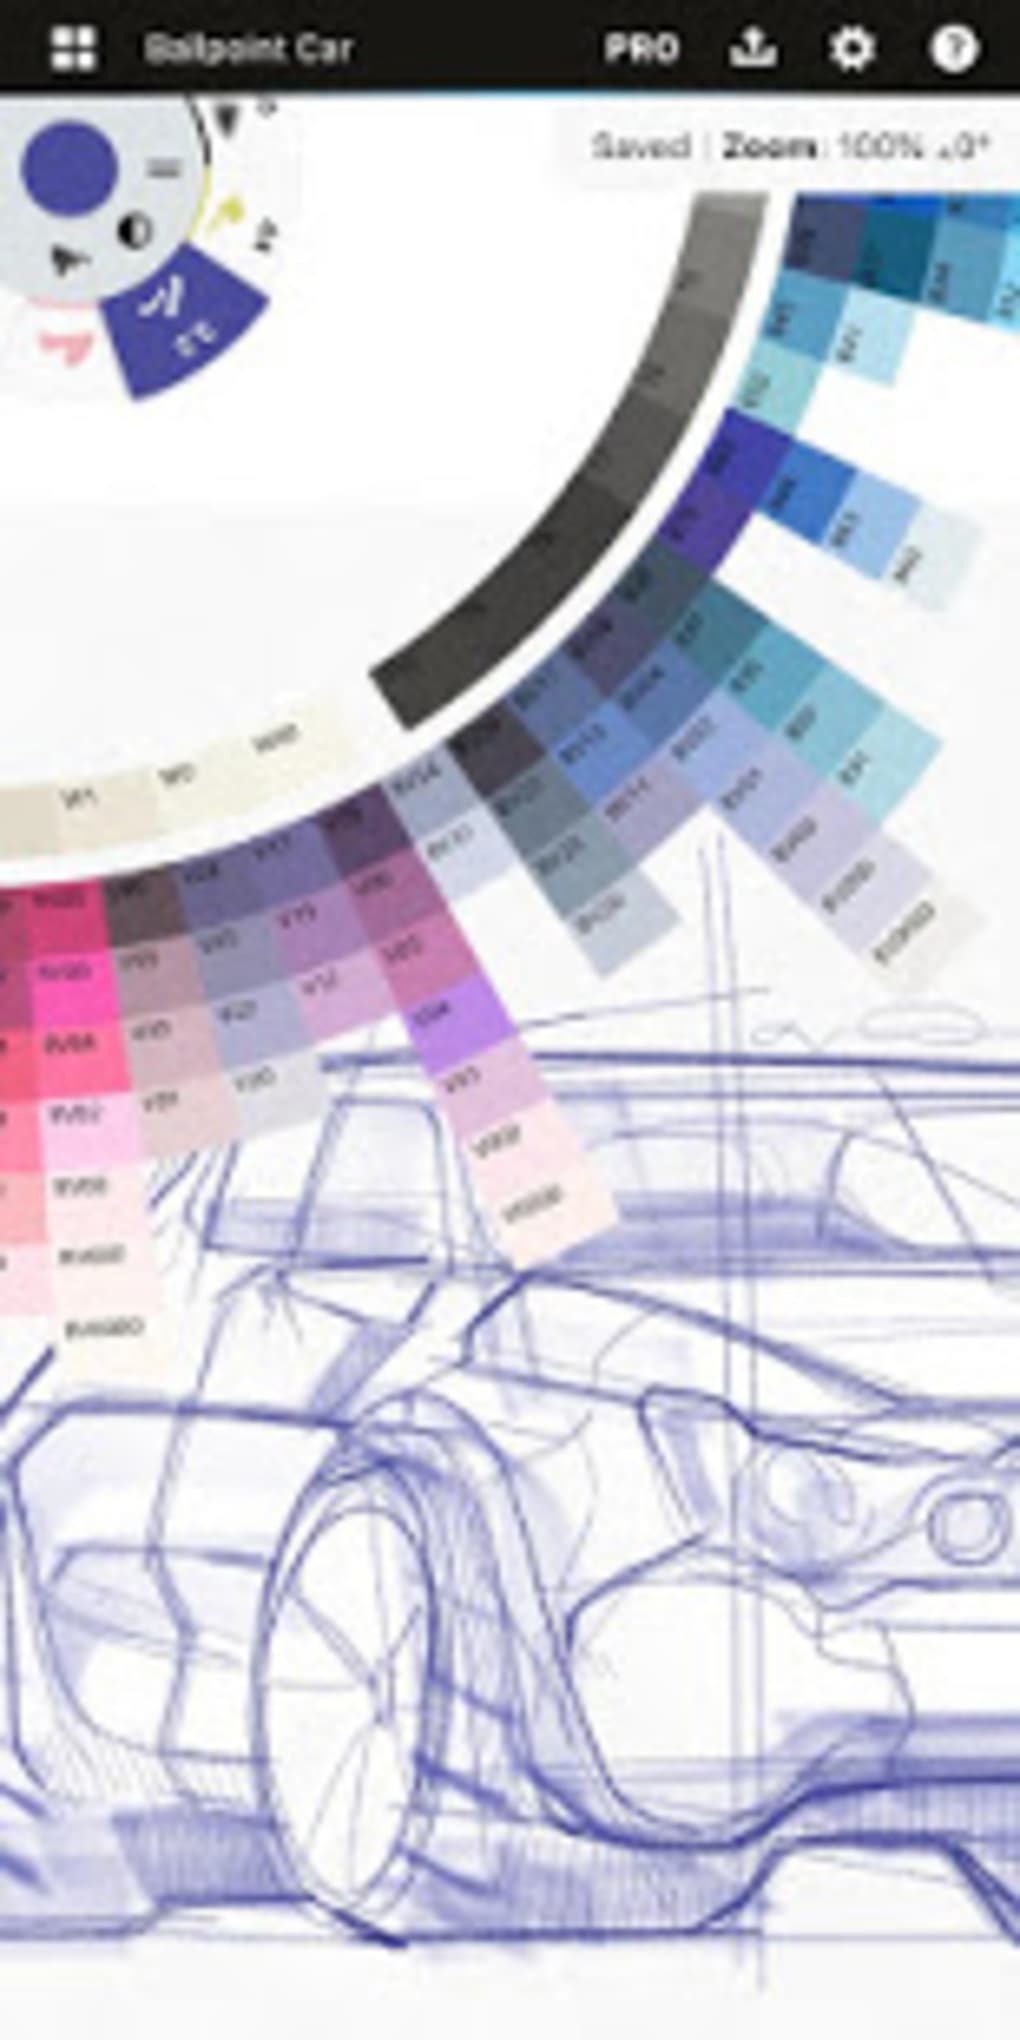 Concepts - Sketch, Design, Illustrate - تنزيل APK للأندرويد | Aptoide